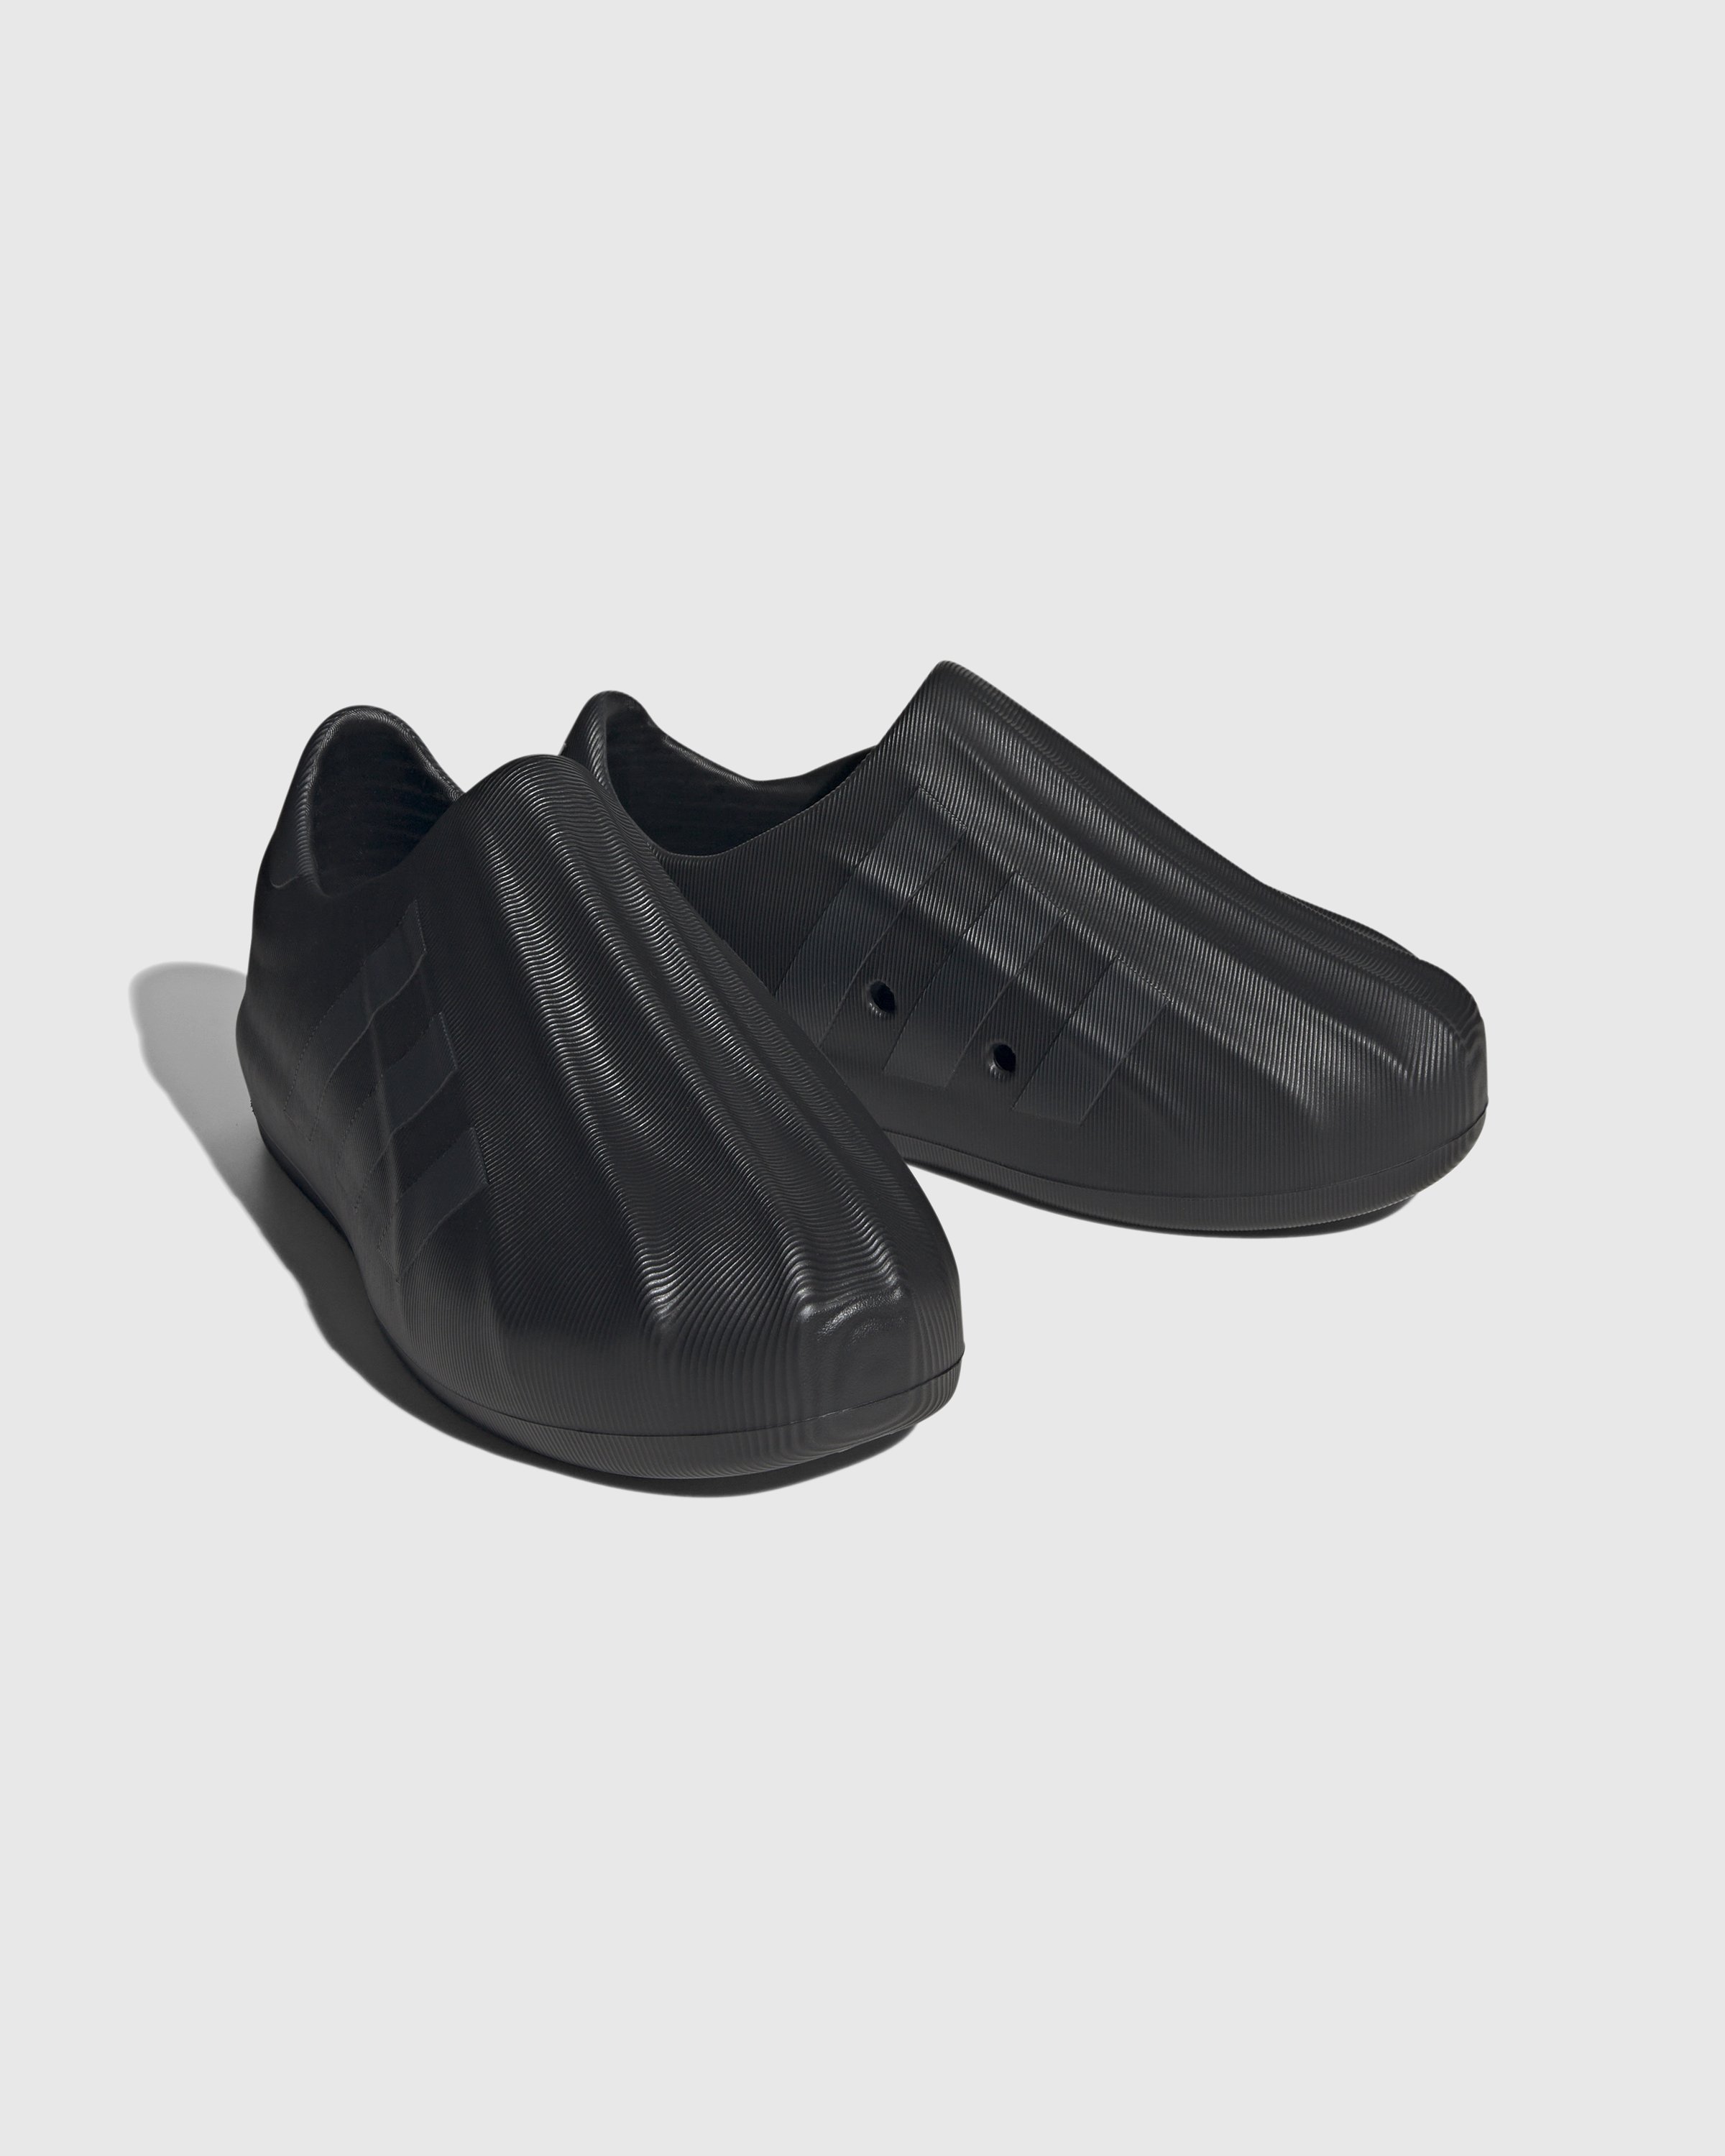 Adidas - Adifom Superstar Black Carbon - Footwear - Black - Image 2